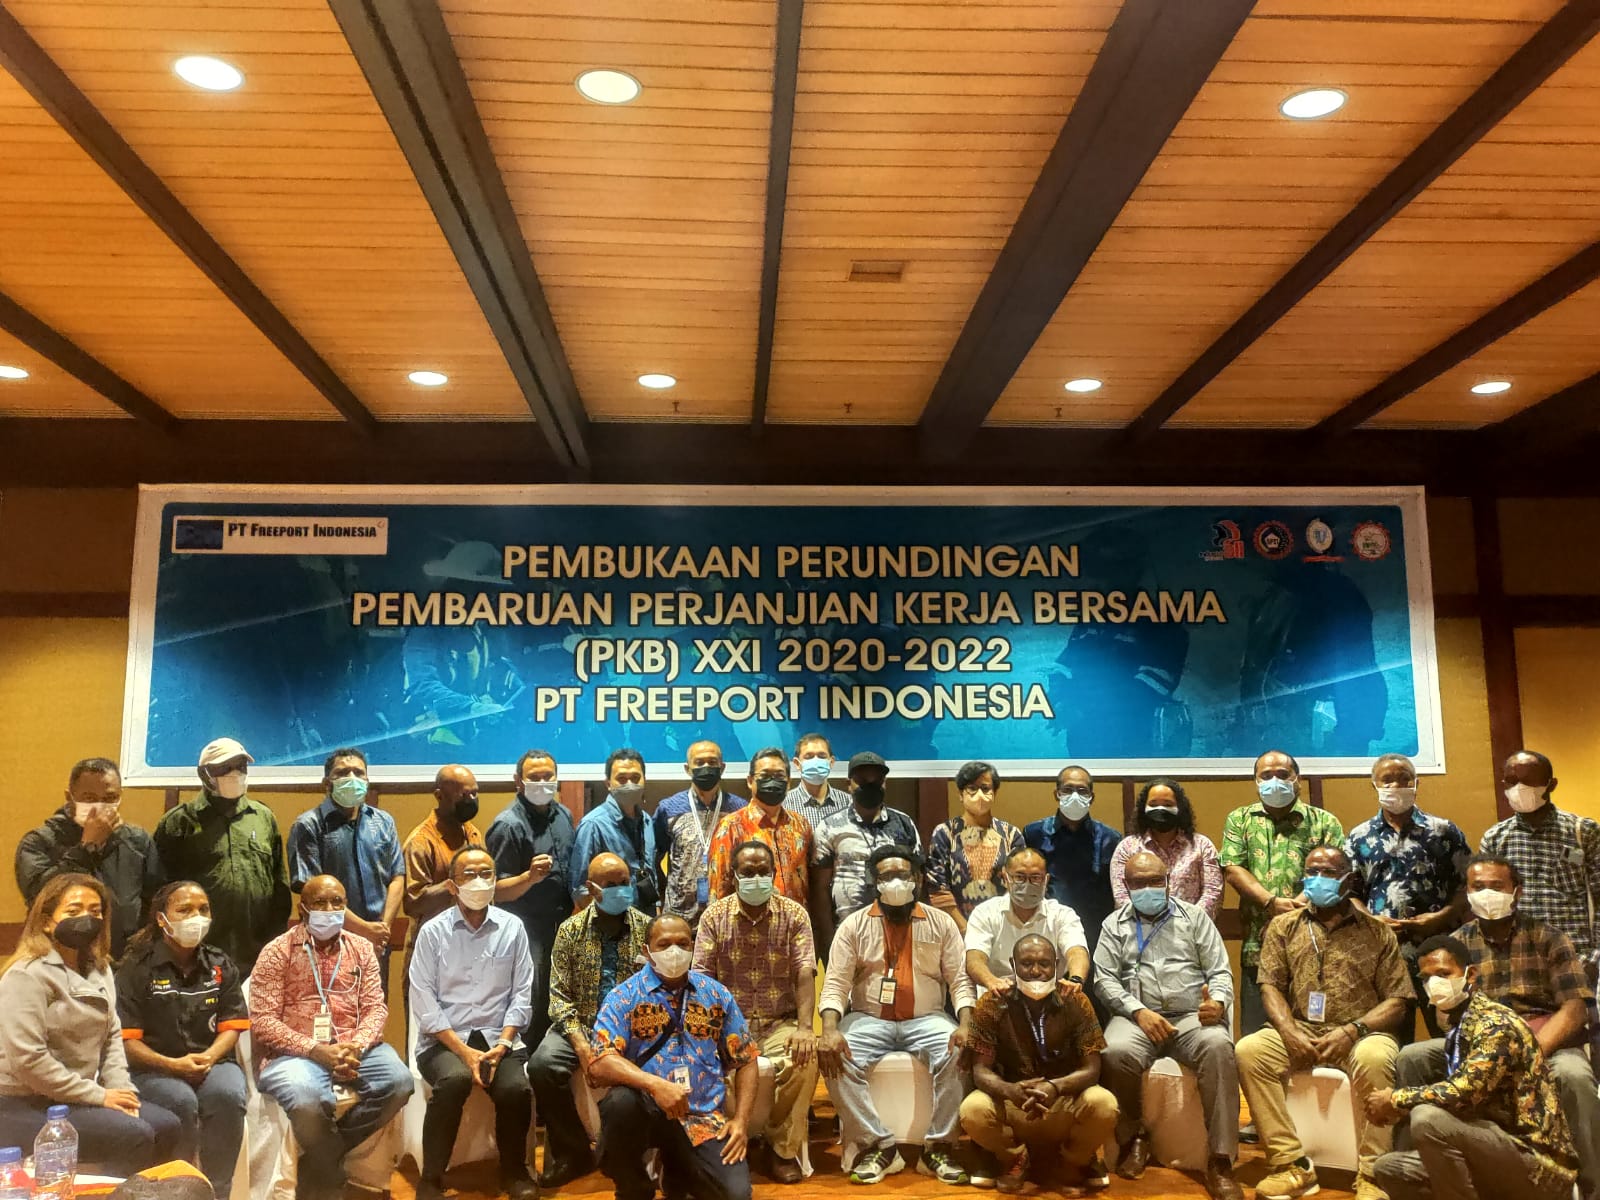 Foto bersama usai acara pembukaan perundingan Perjanjian Kerja Bersama XXI Tahun 2020-2022 PT Freeport Indonesia.